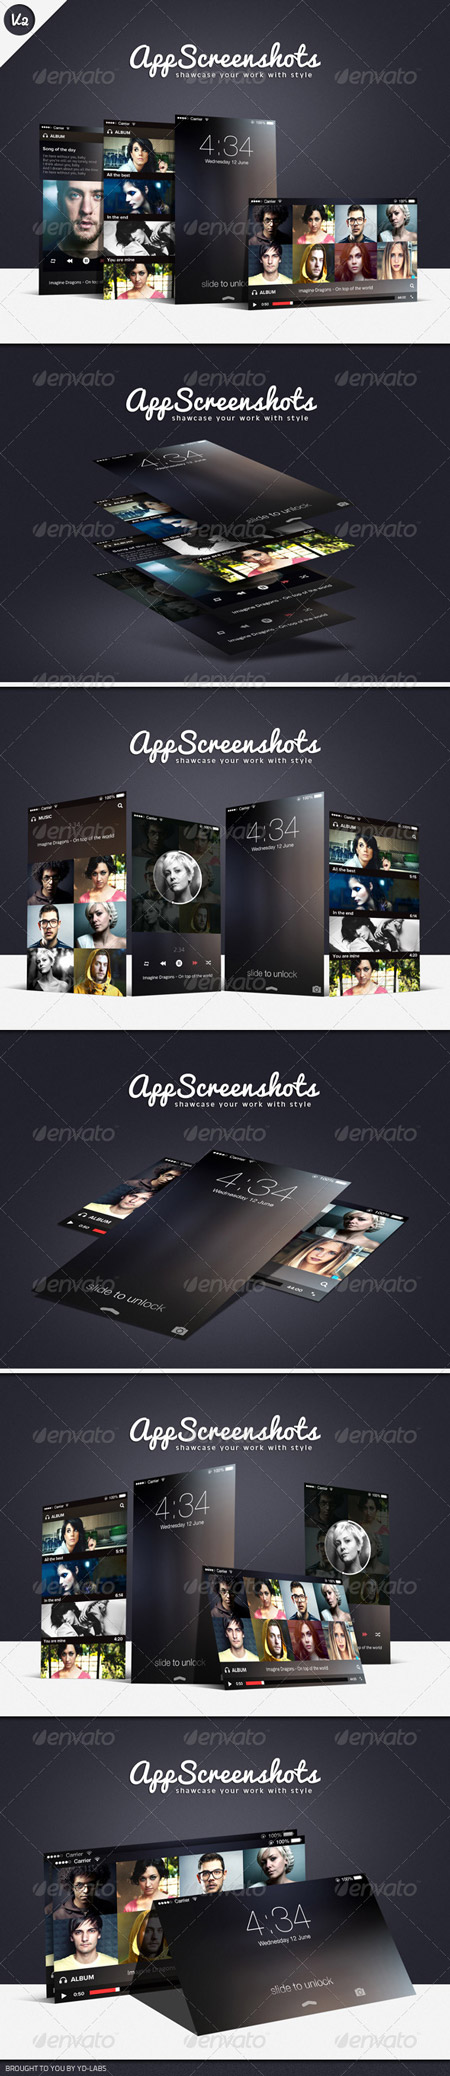 PSD - App Screenshot Mockups V2